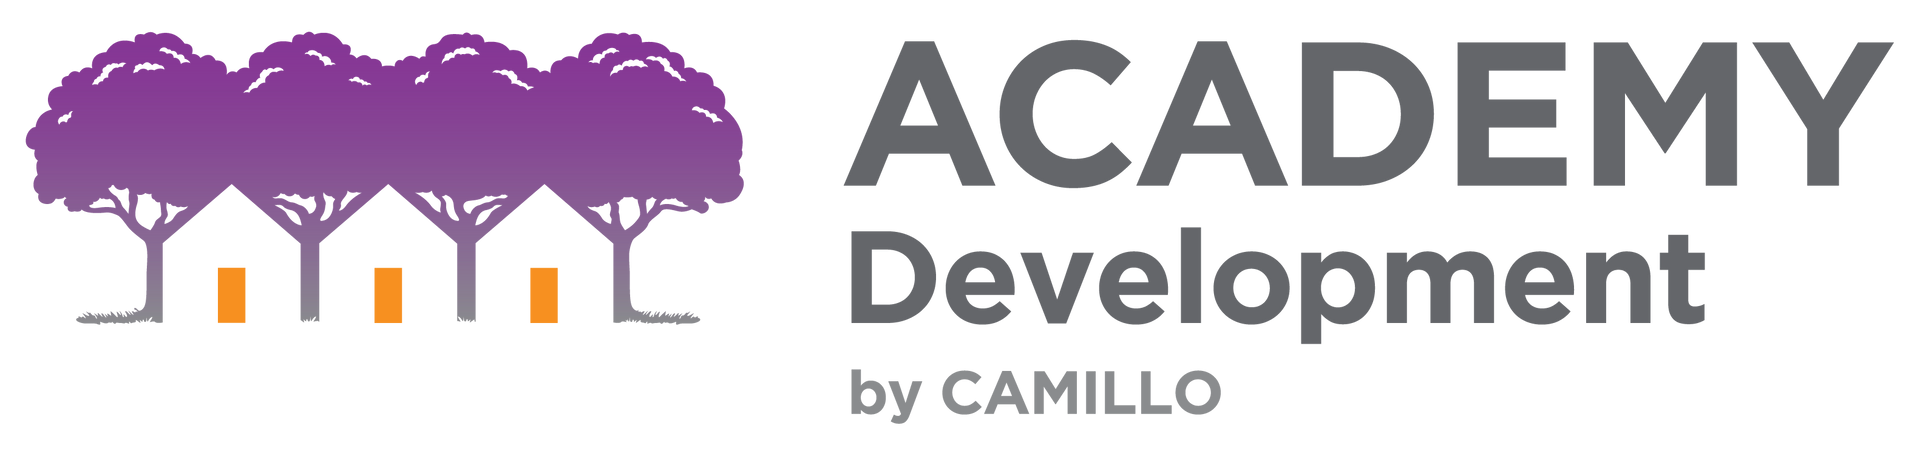 Academy Development by Camillo Logo